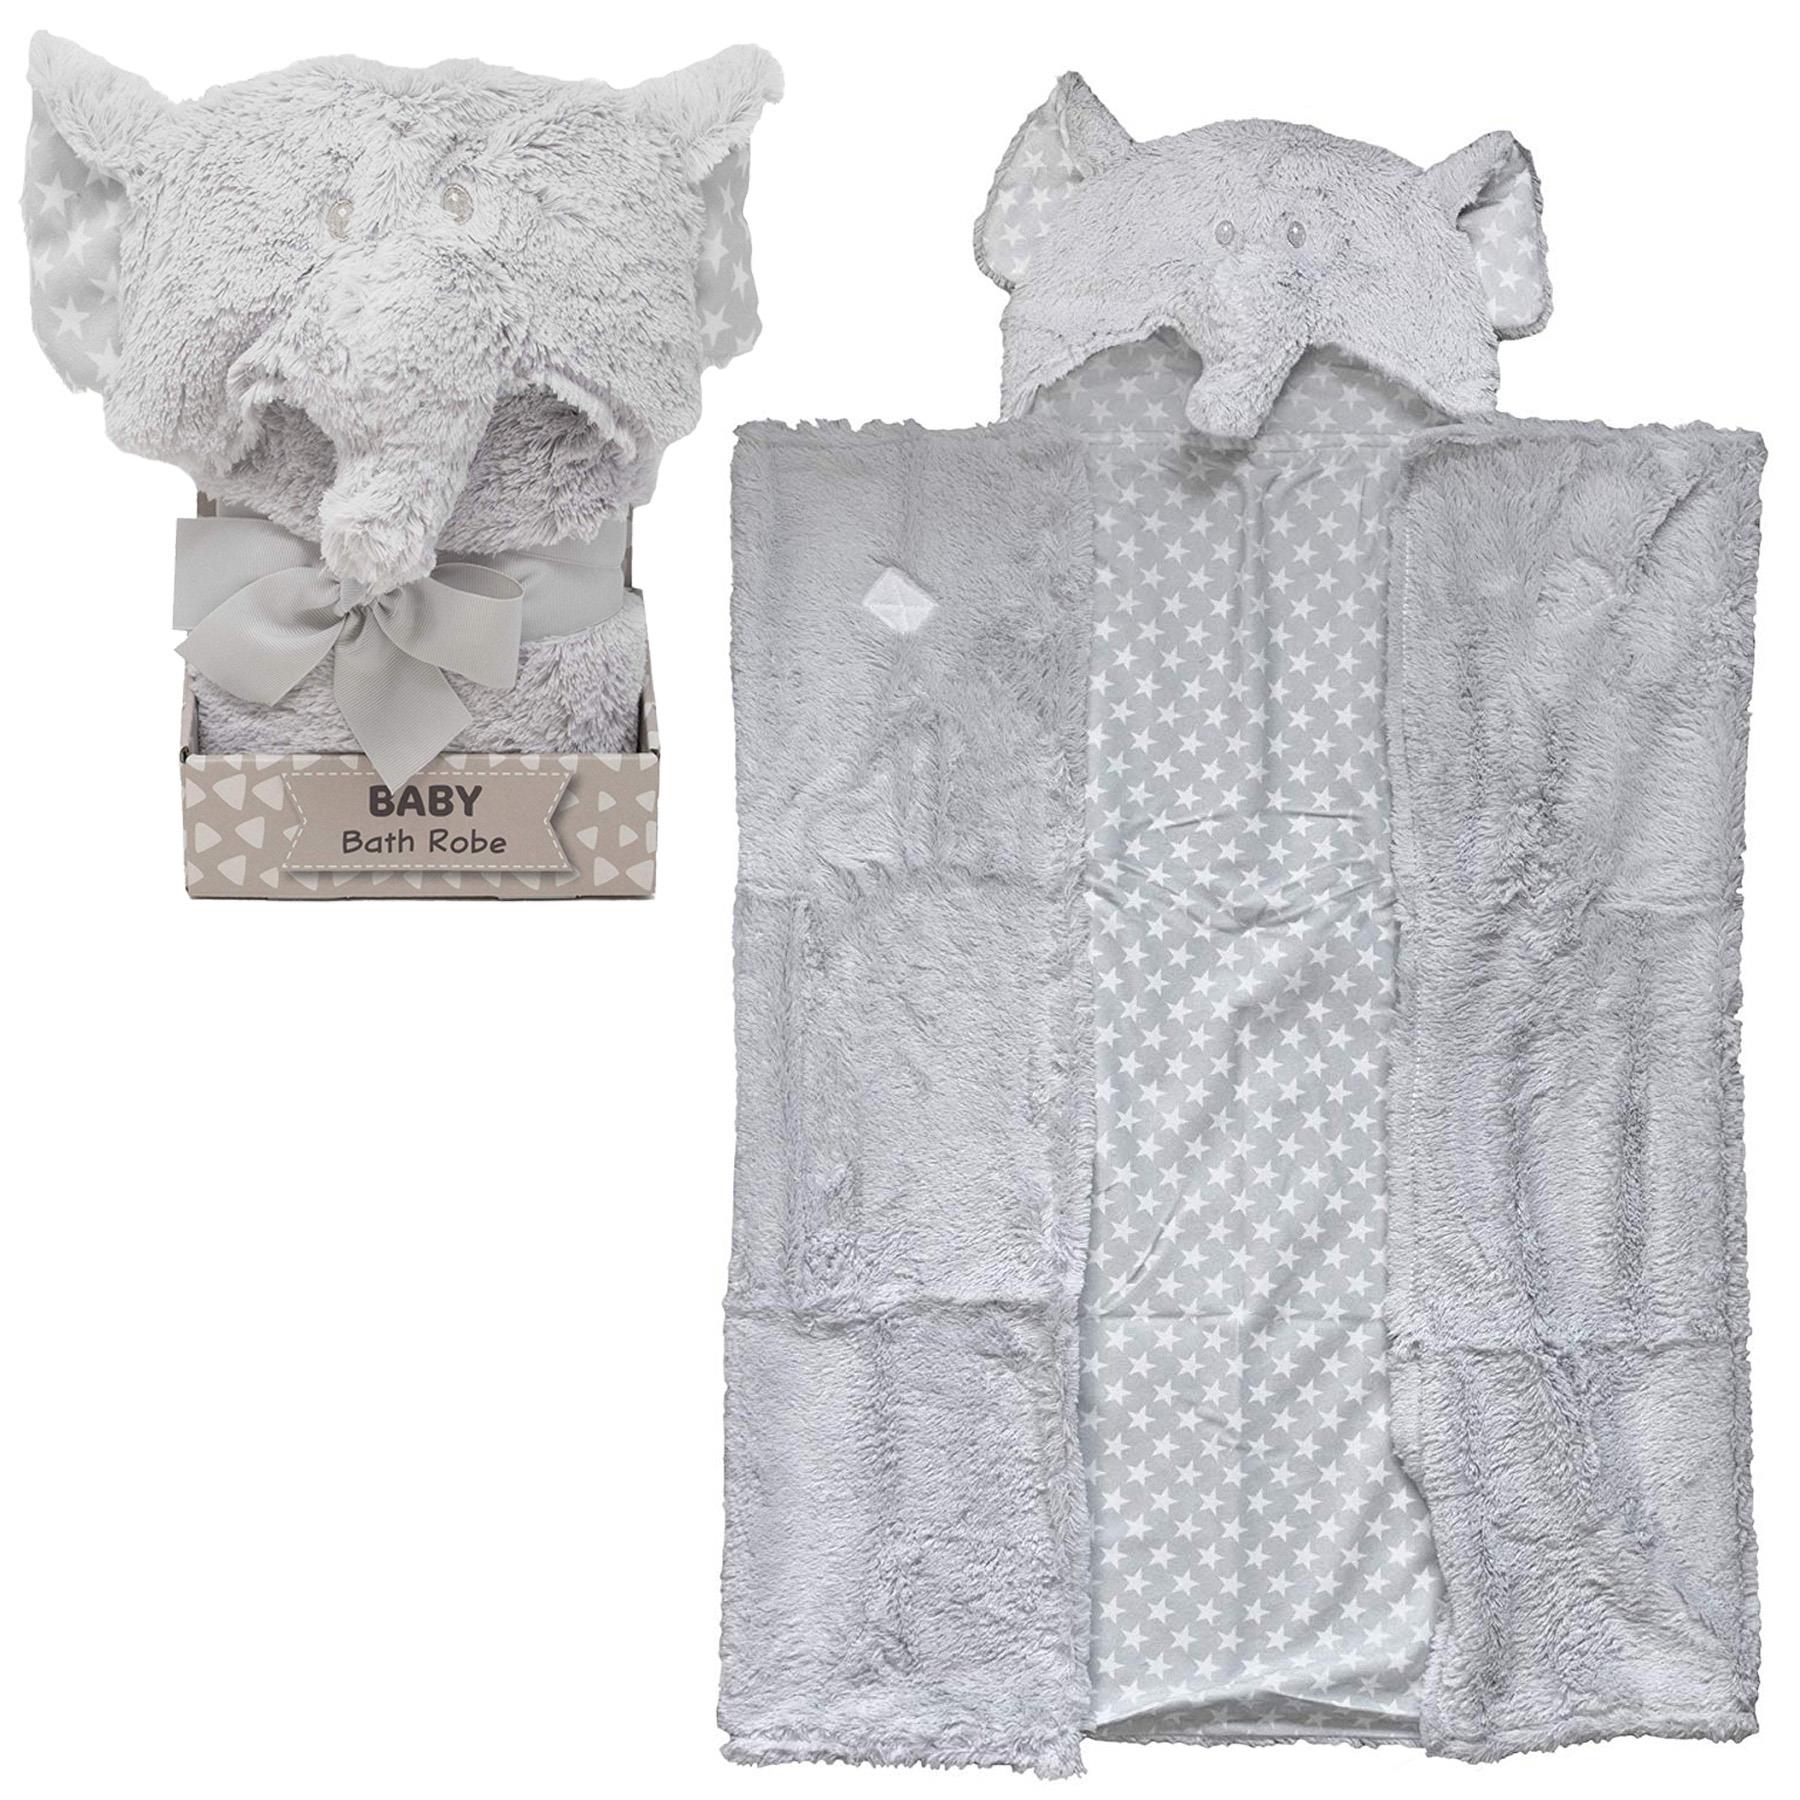 Super Soft Baby Animal Hooded Blanket 100cm x 75cm - Elephant